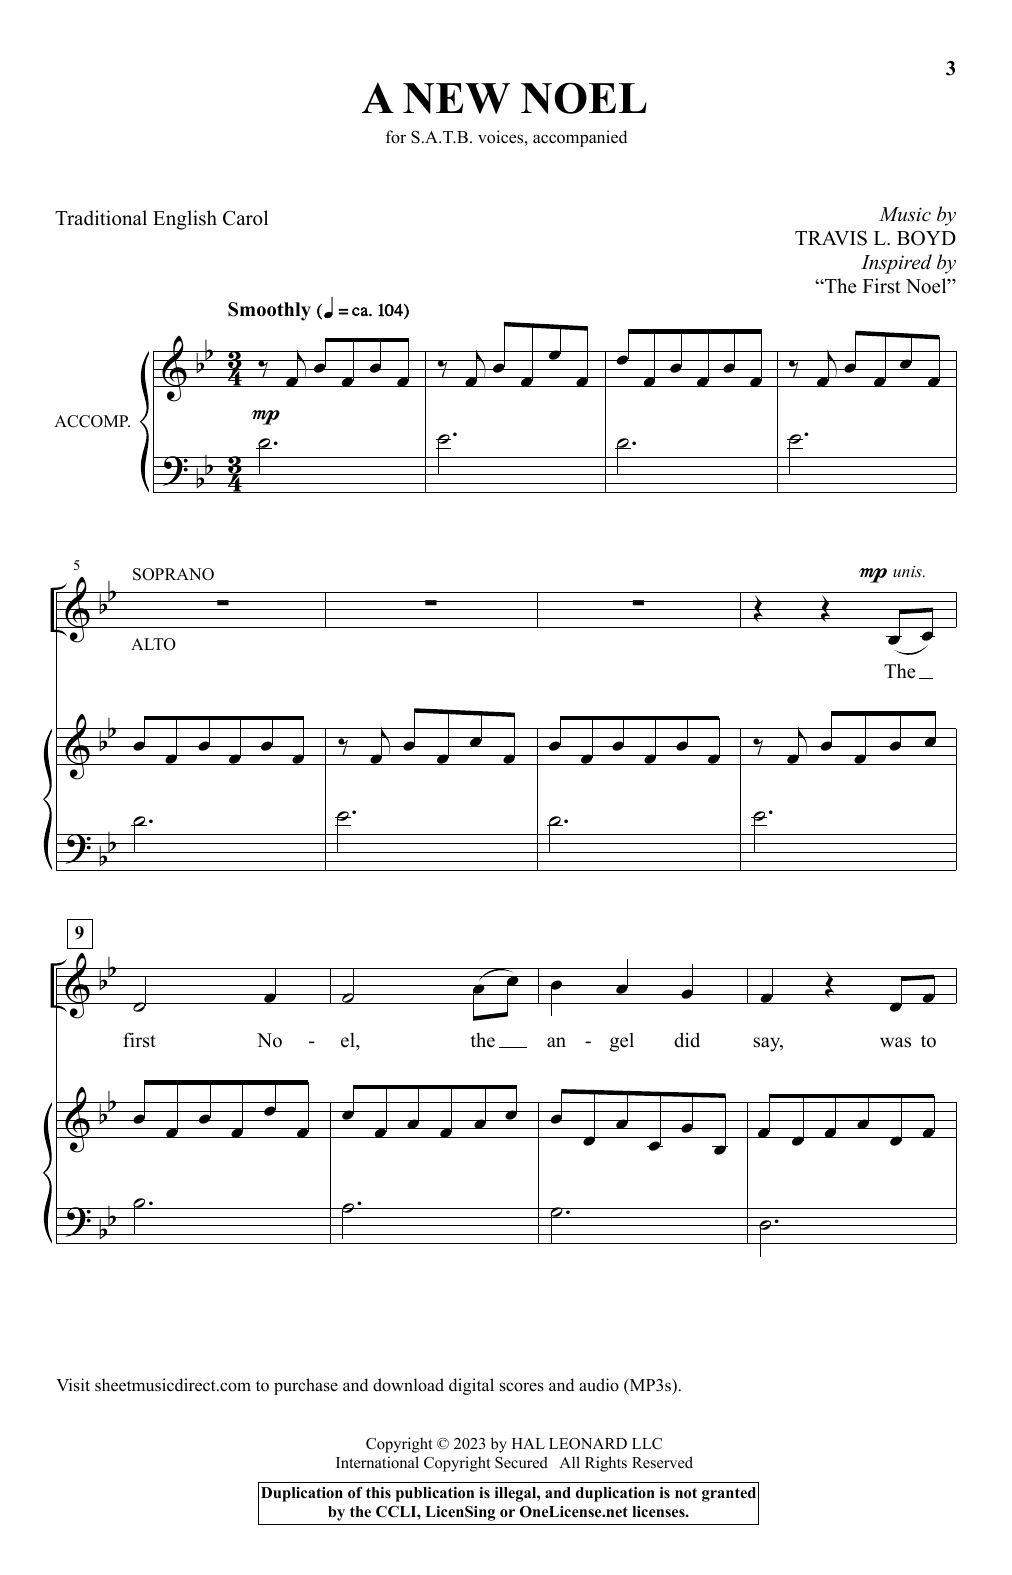 Travis L. Boyd A New Noel Sheet Music Notes & Chords for SATB Choir - Download or Print PDF